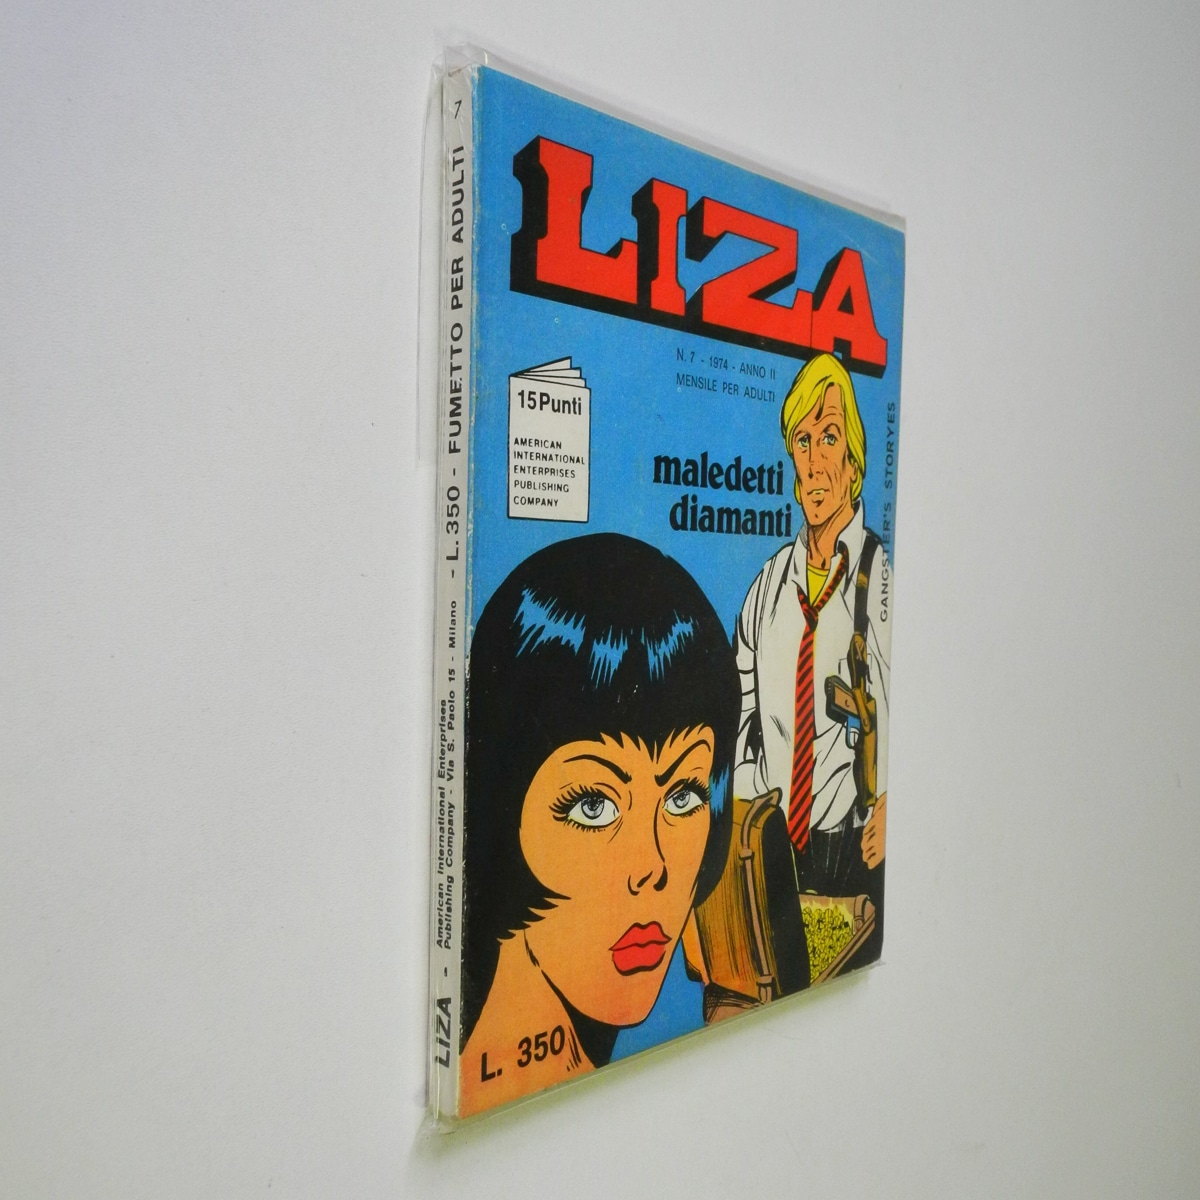 Liza n. 7 American International Publishing company